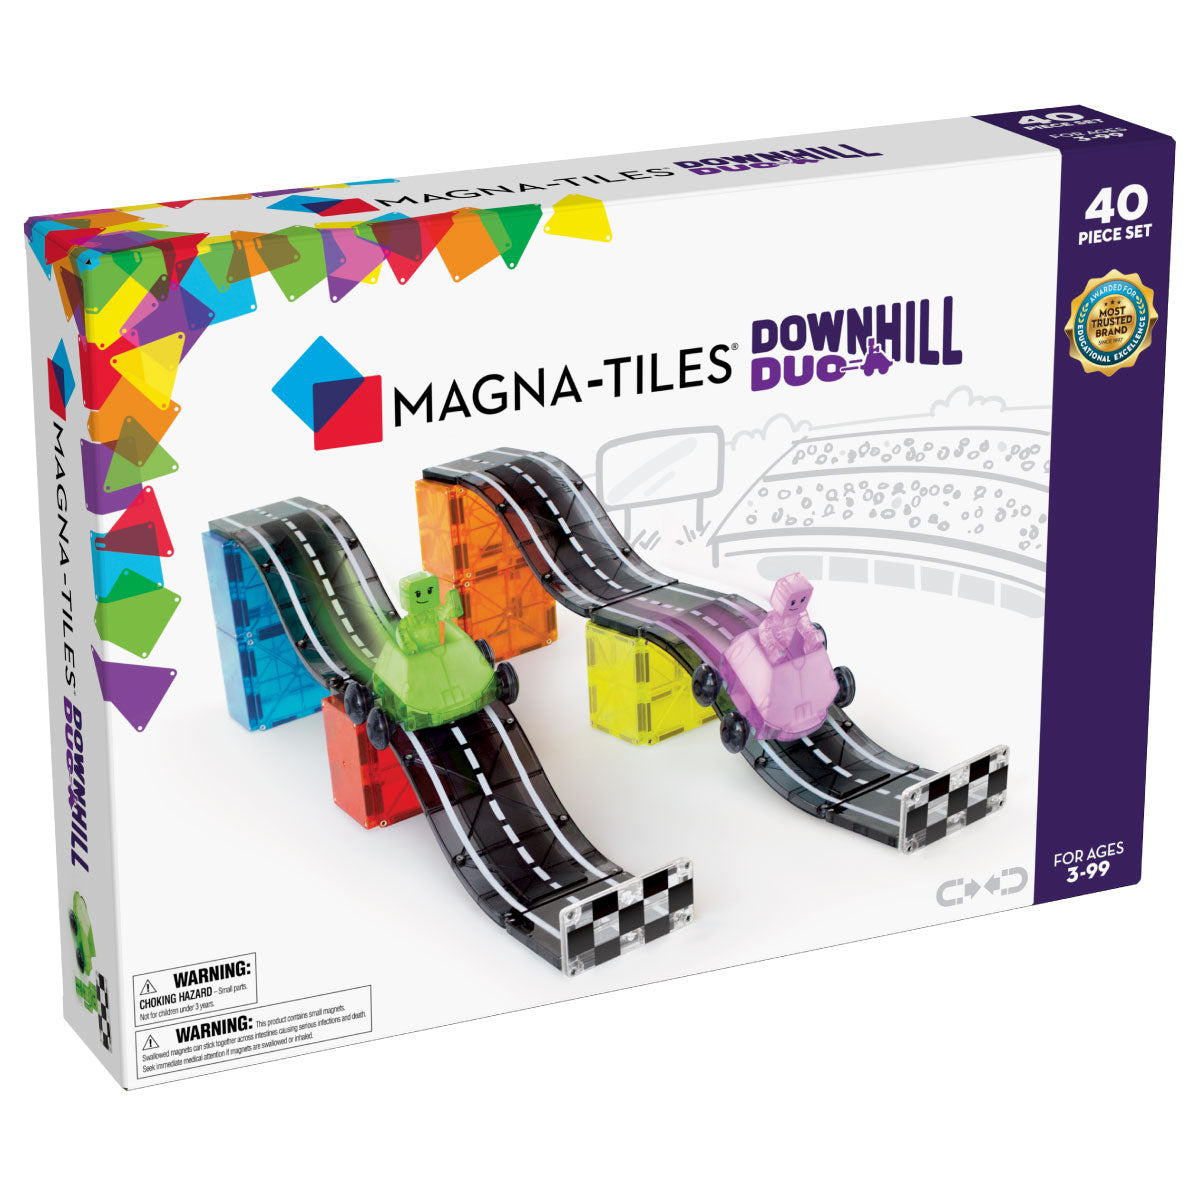 MagnaTiles Downhill Duo 40 Piece Set